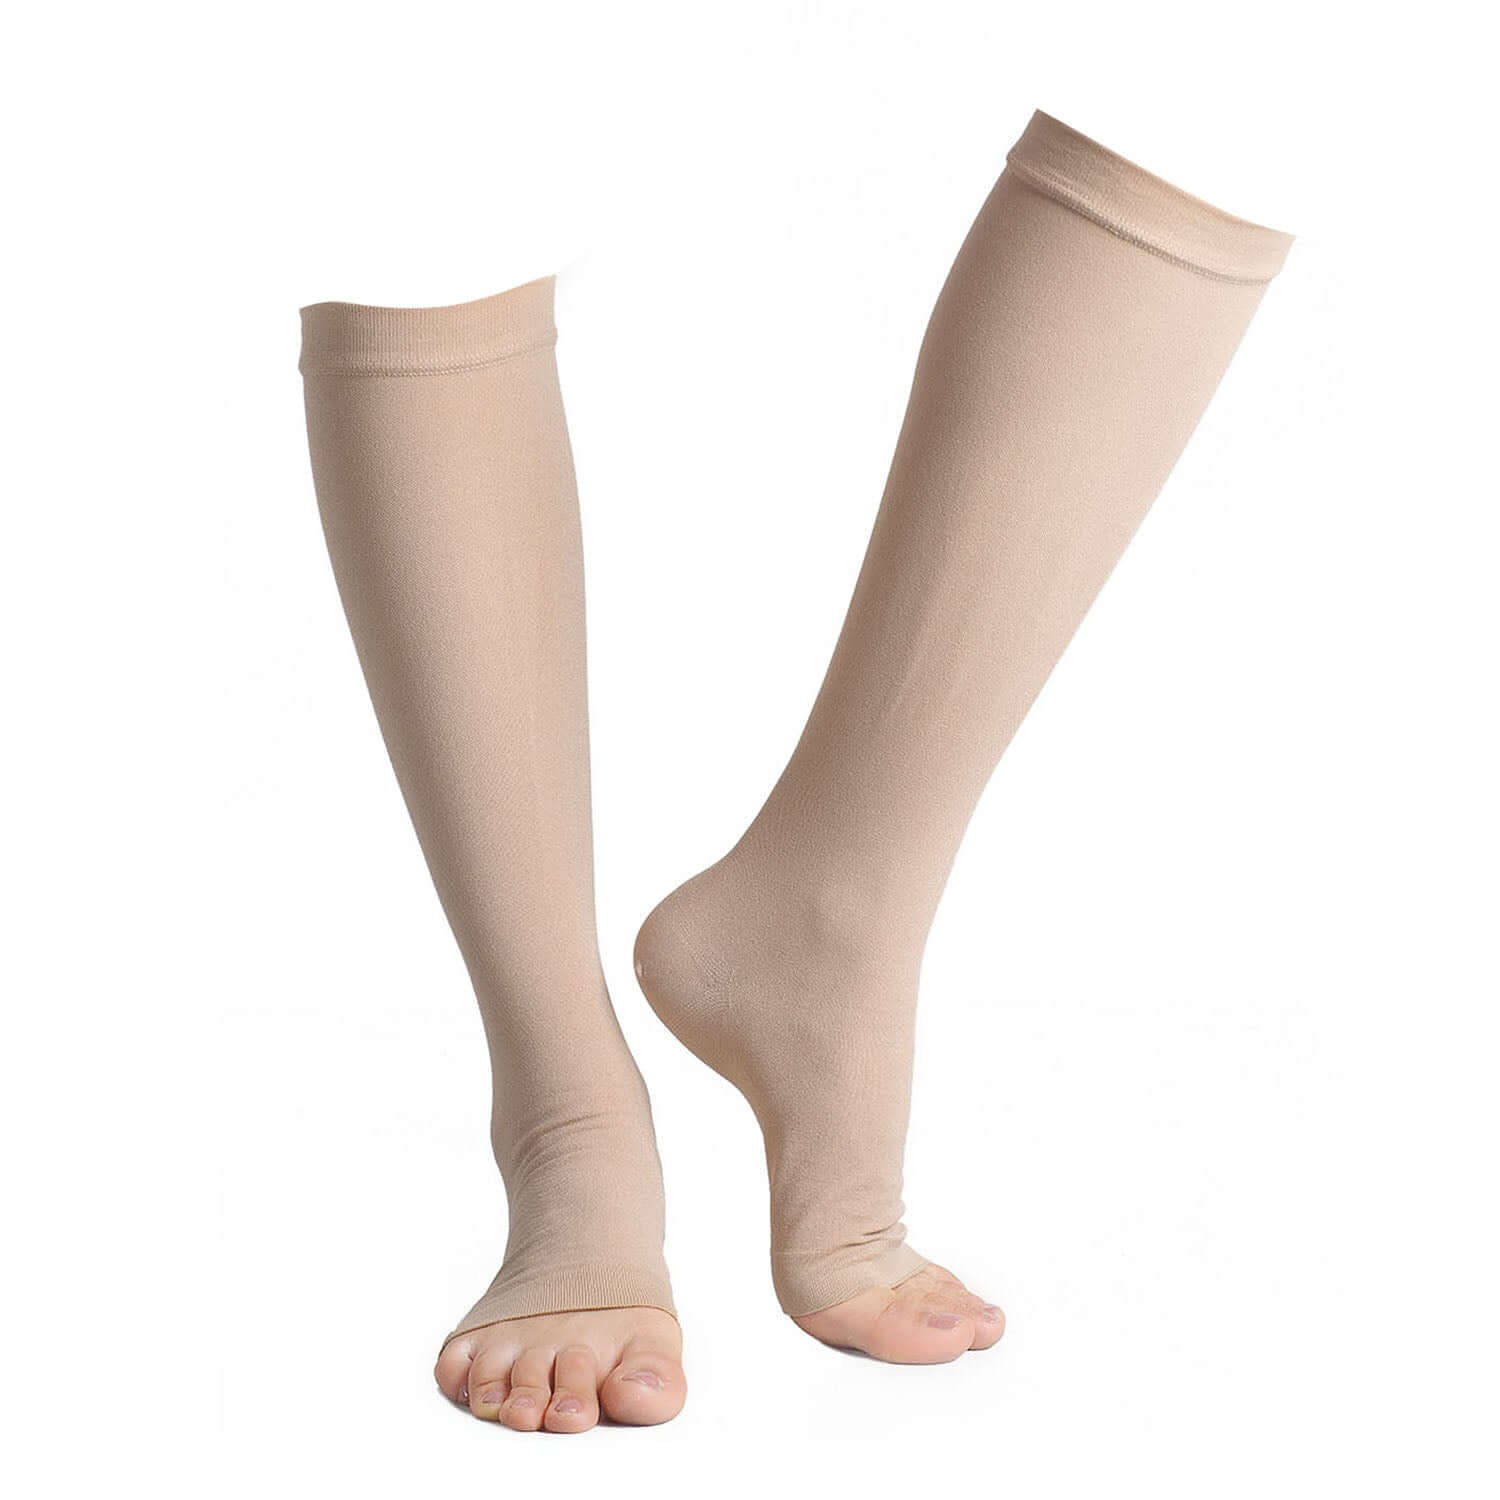 mediven for Men Classic, 20-30 mmHg – Calf High Compression Stockings,  Closed Toe Leg Circulation for Men, Compression Dress Socks, Leg Support